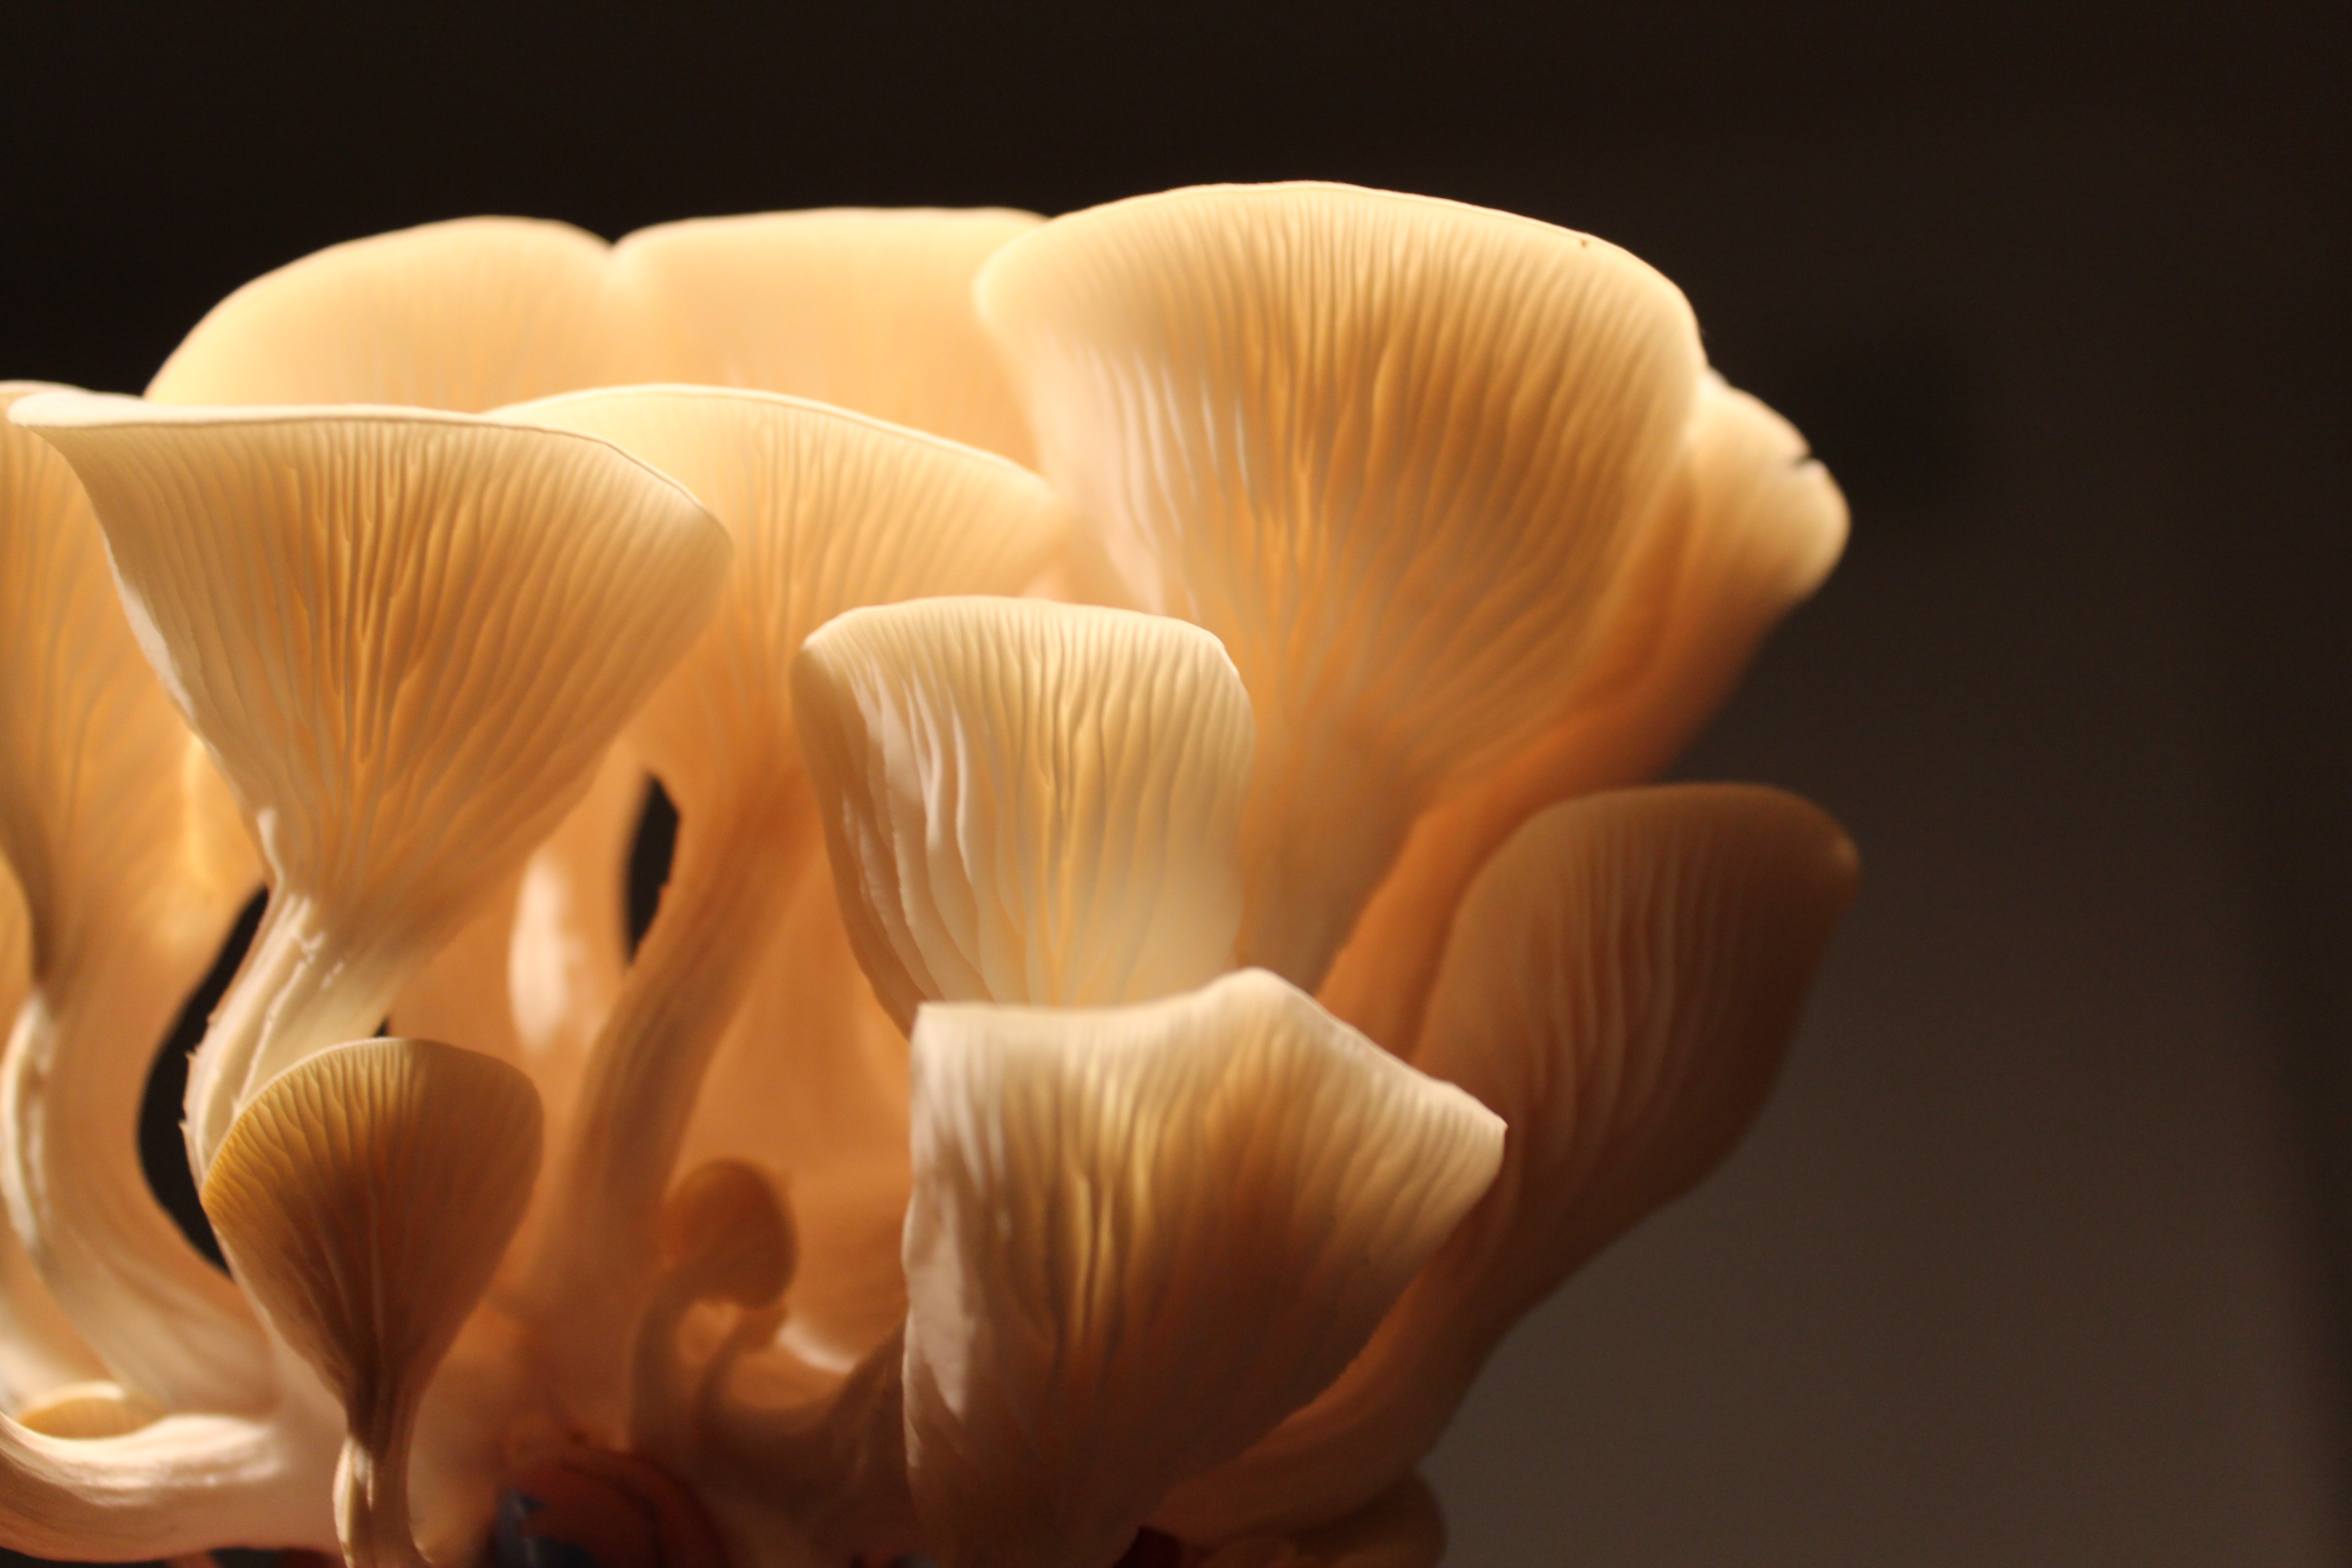 Golden gourmet oyster Mushrooms grown in an urban environment by Designer Rachel Horton-Kitchlew